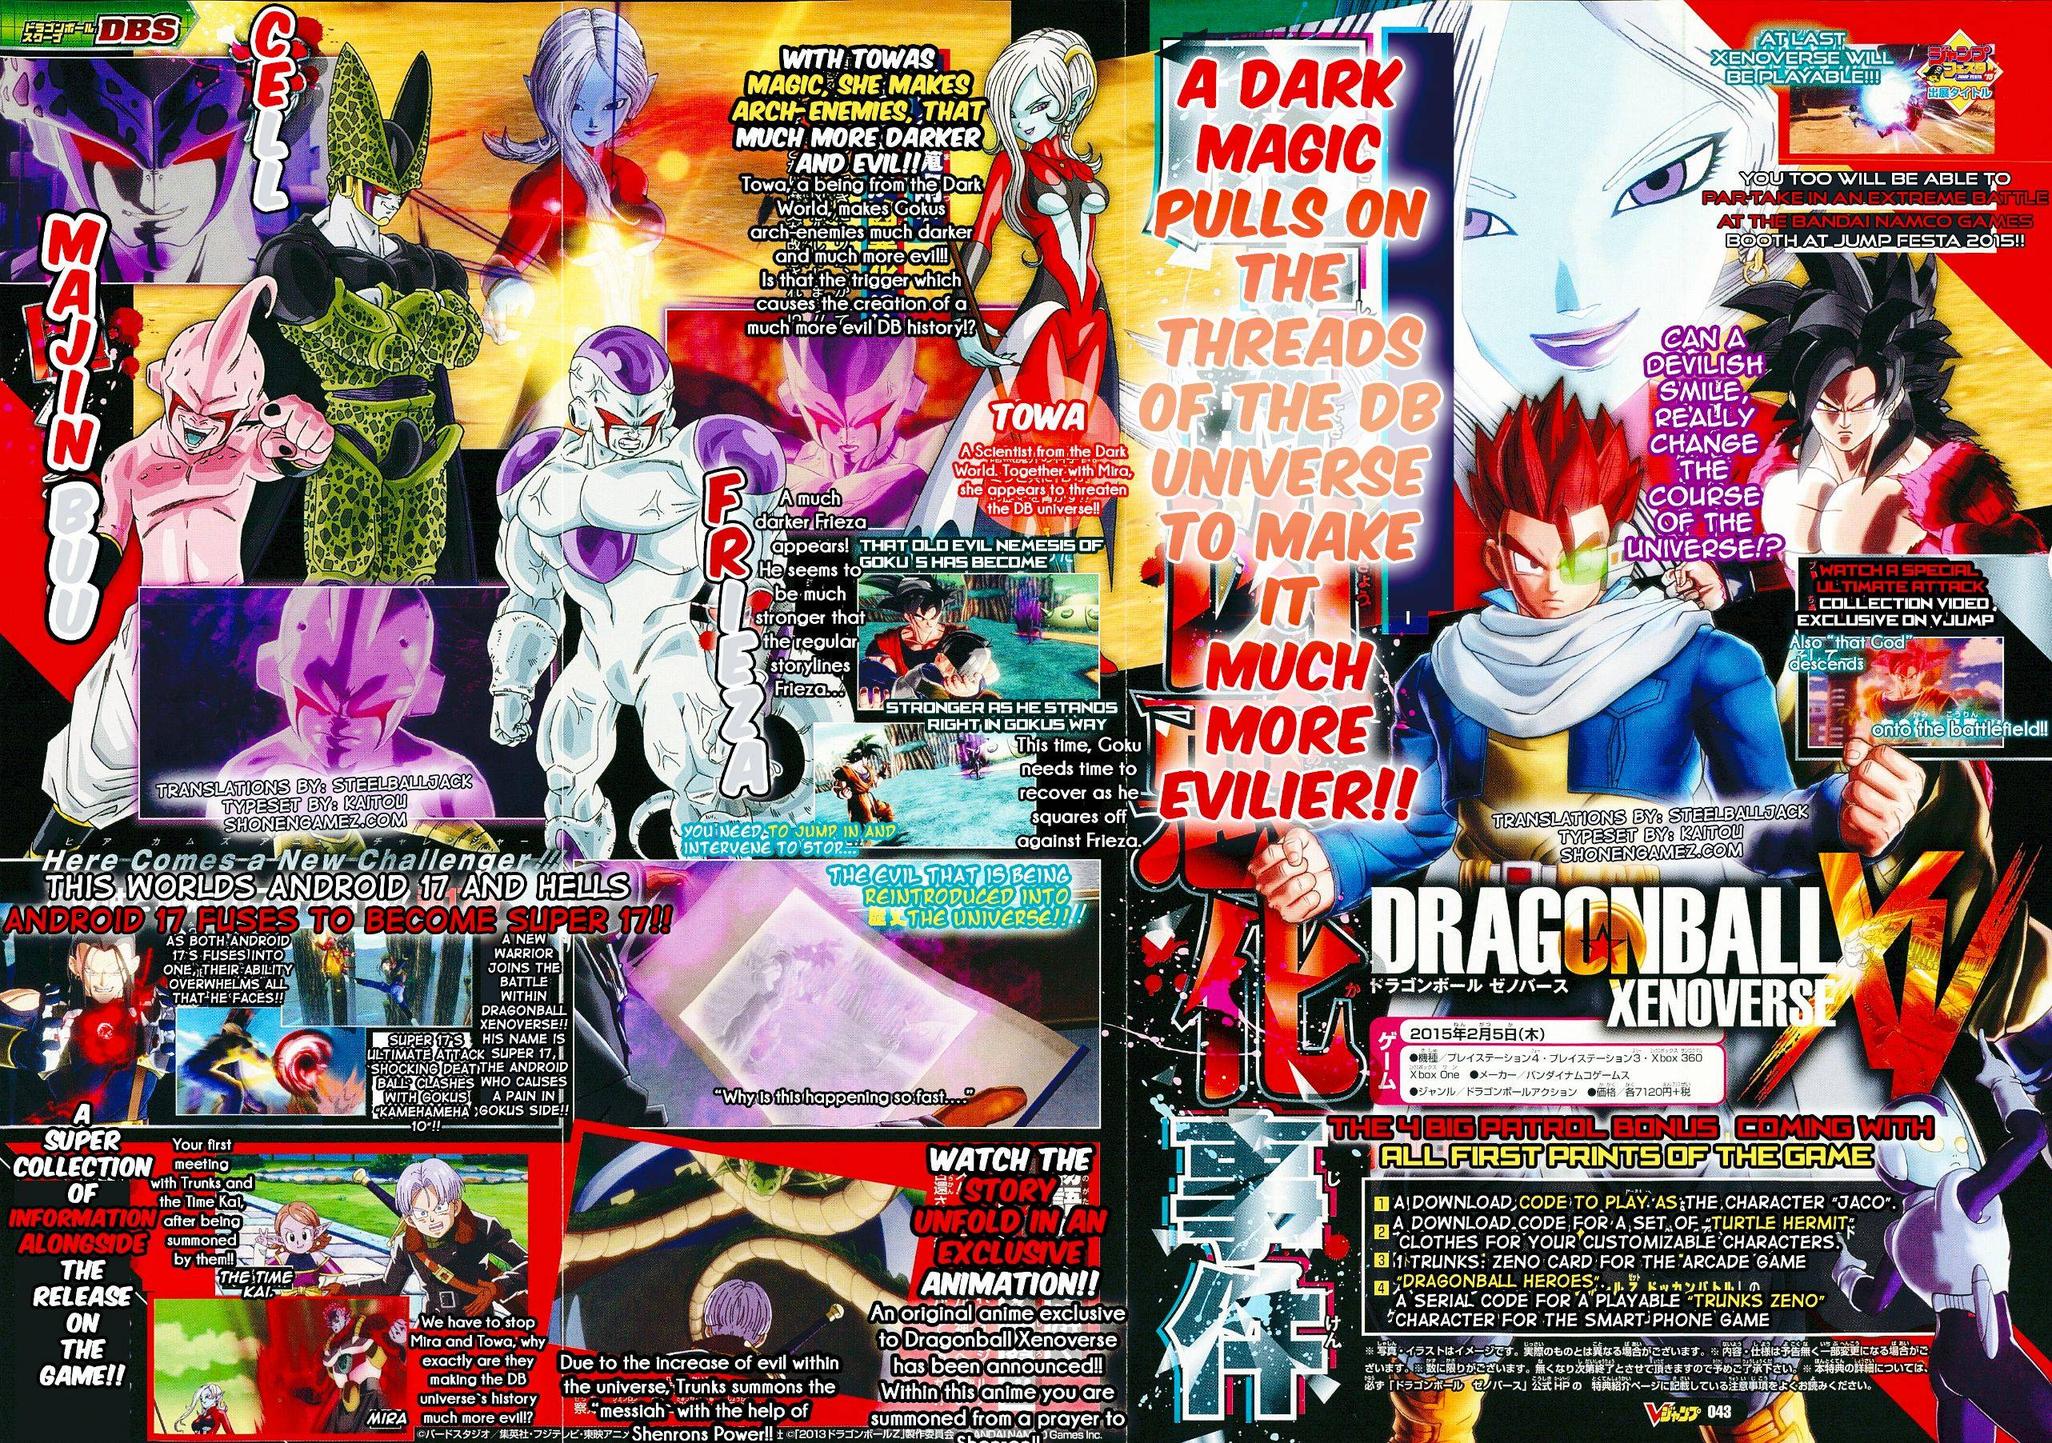 Super Saiyan God Goku (DBL07-09S), Characters